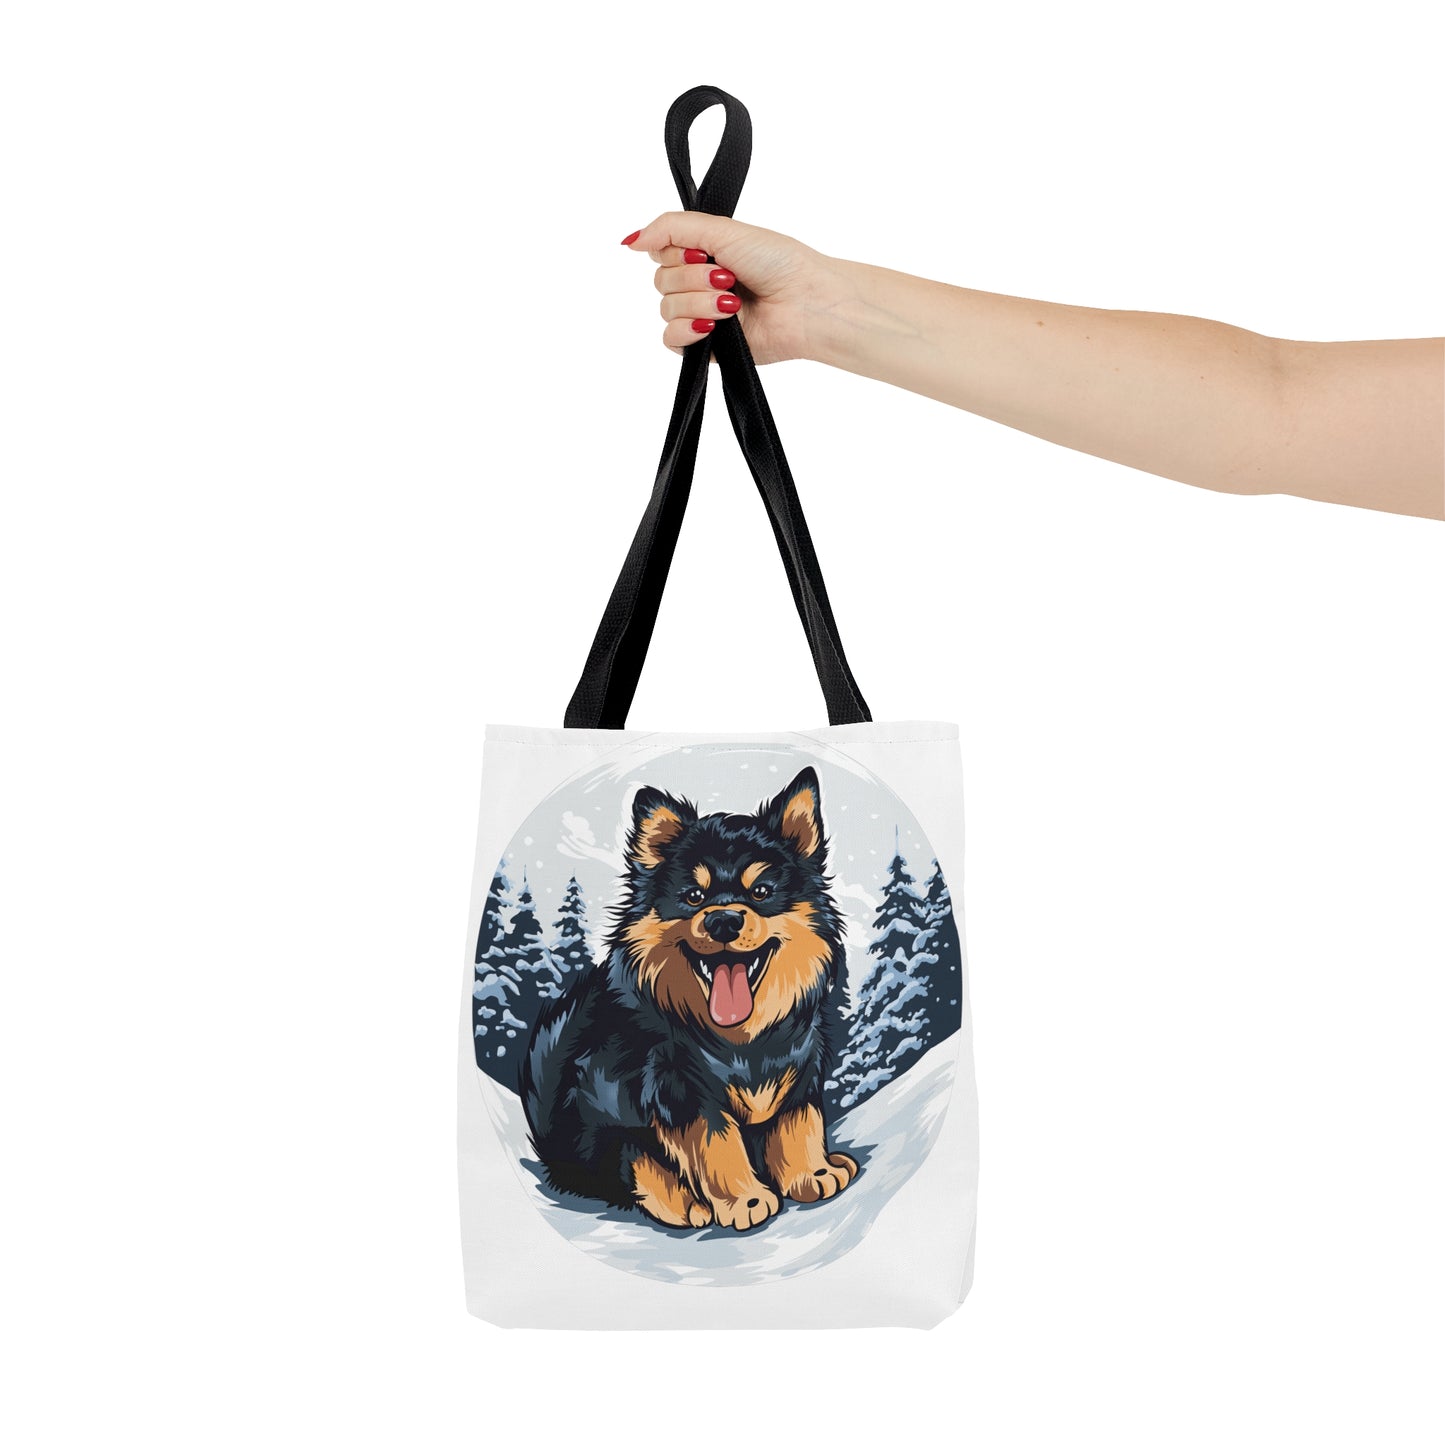 Finnish Lapphund - Snowy #5 - Tote Bag